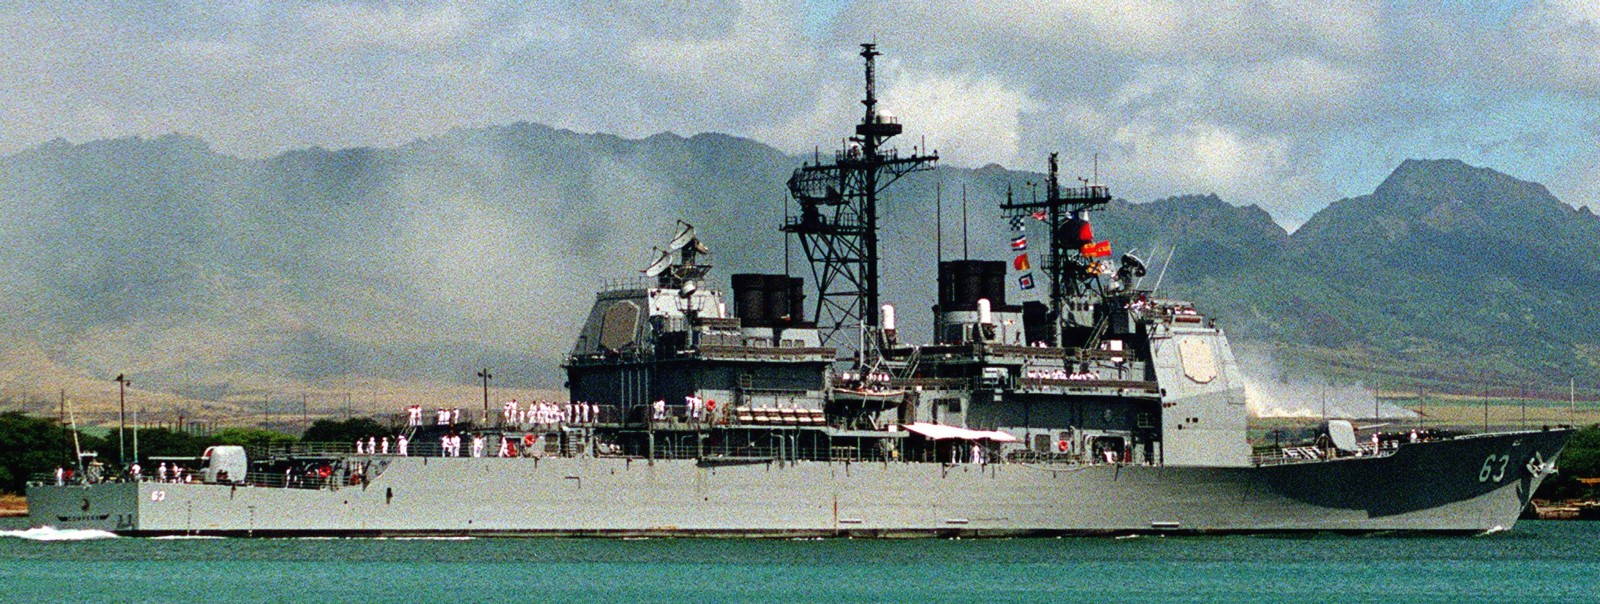 cg-63 uss cowpens ticonderoga class guided missile cruiser aegis us navy pearl harbor hawaii 90